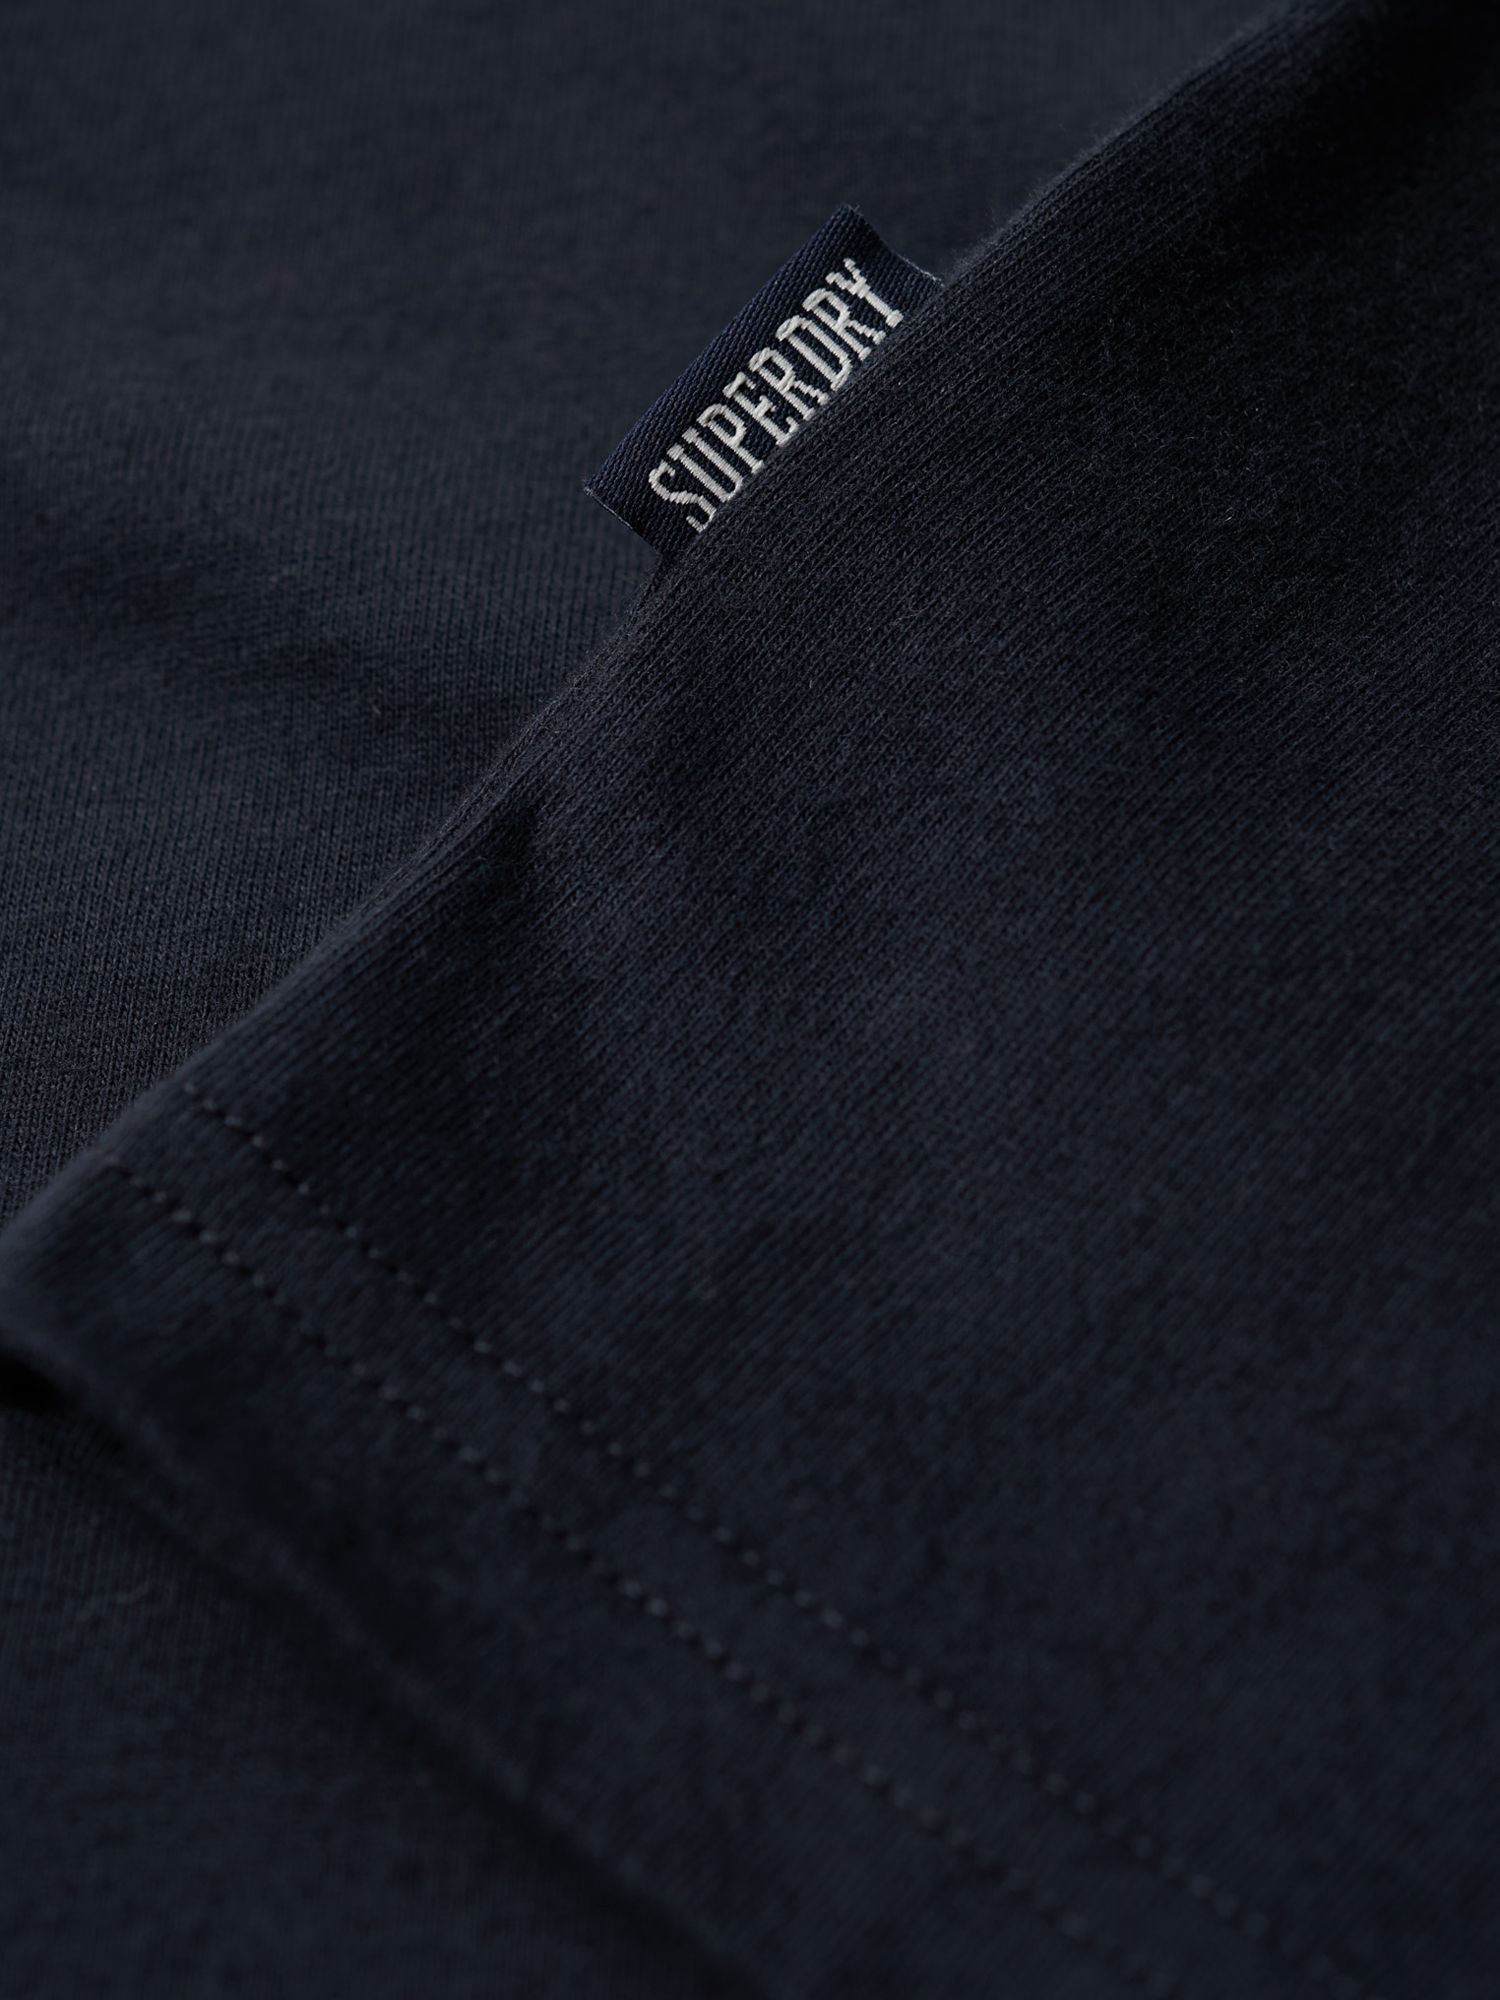 Superdry Organic Cotton Embroidered Logo V-Neck T-Shirt, Navy, XXXL